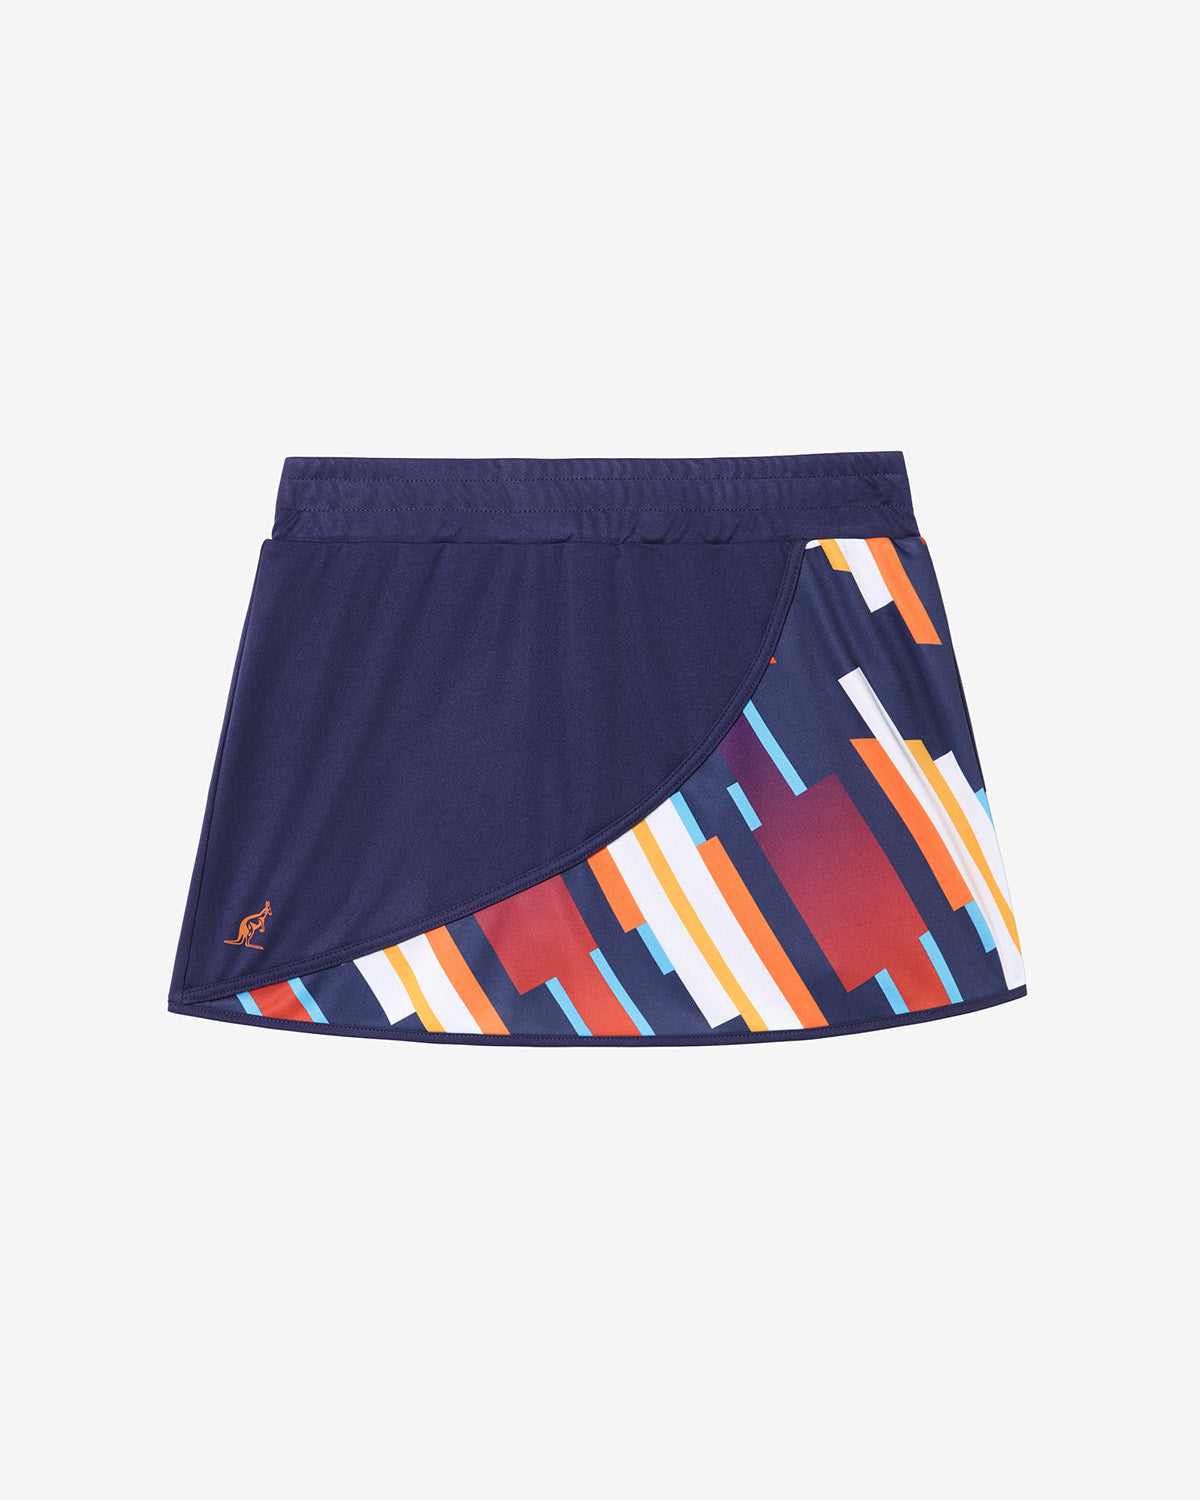 S-Lights Skirt: Australian Tennis